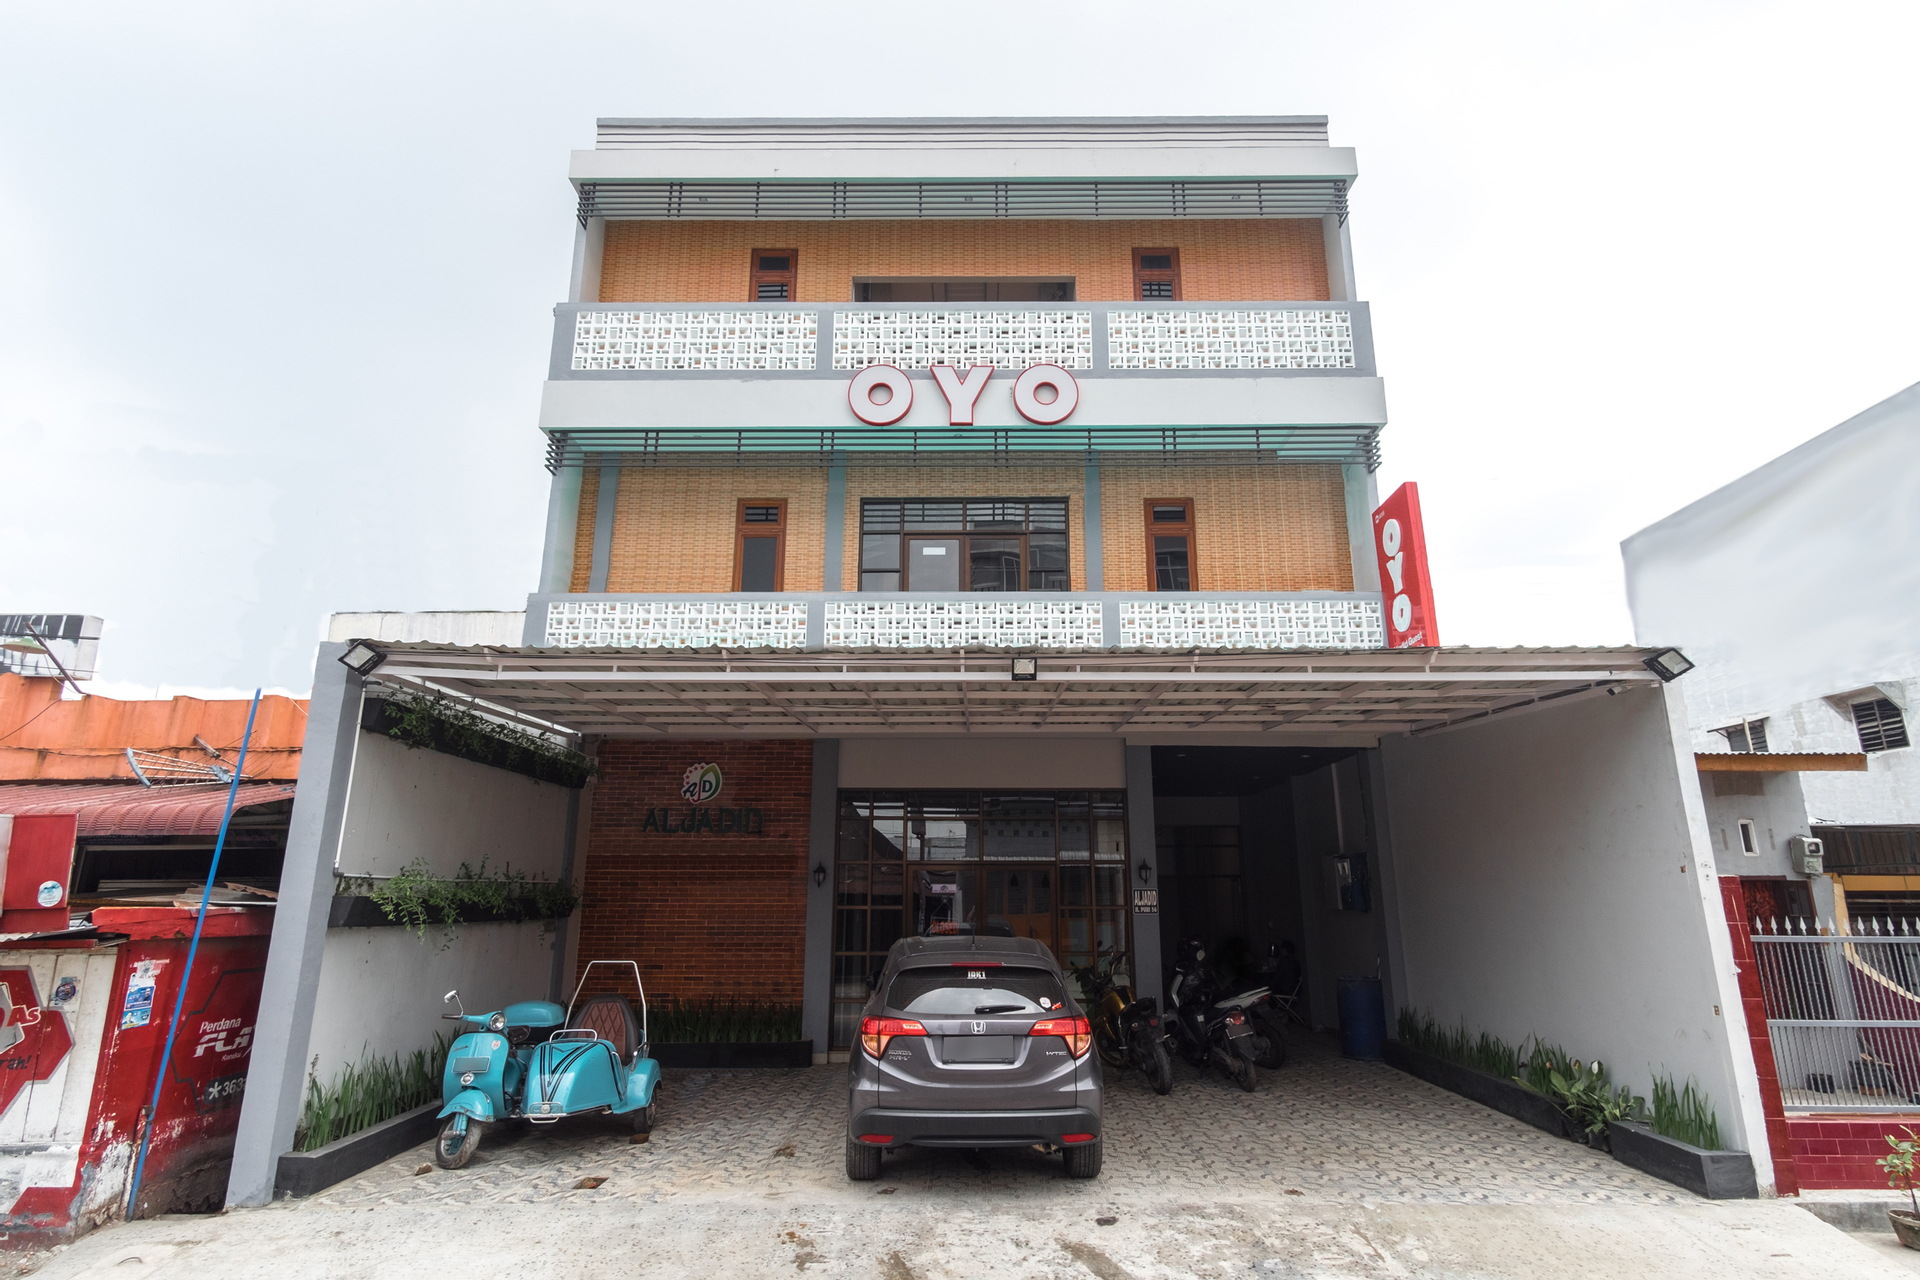 Exterior & Views 1, OYO 456 Aljadid Guest House Syariah, Medan